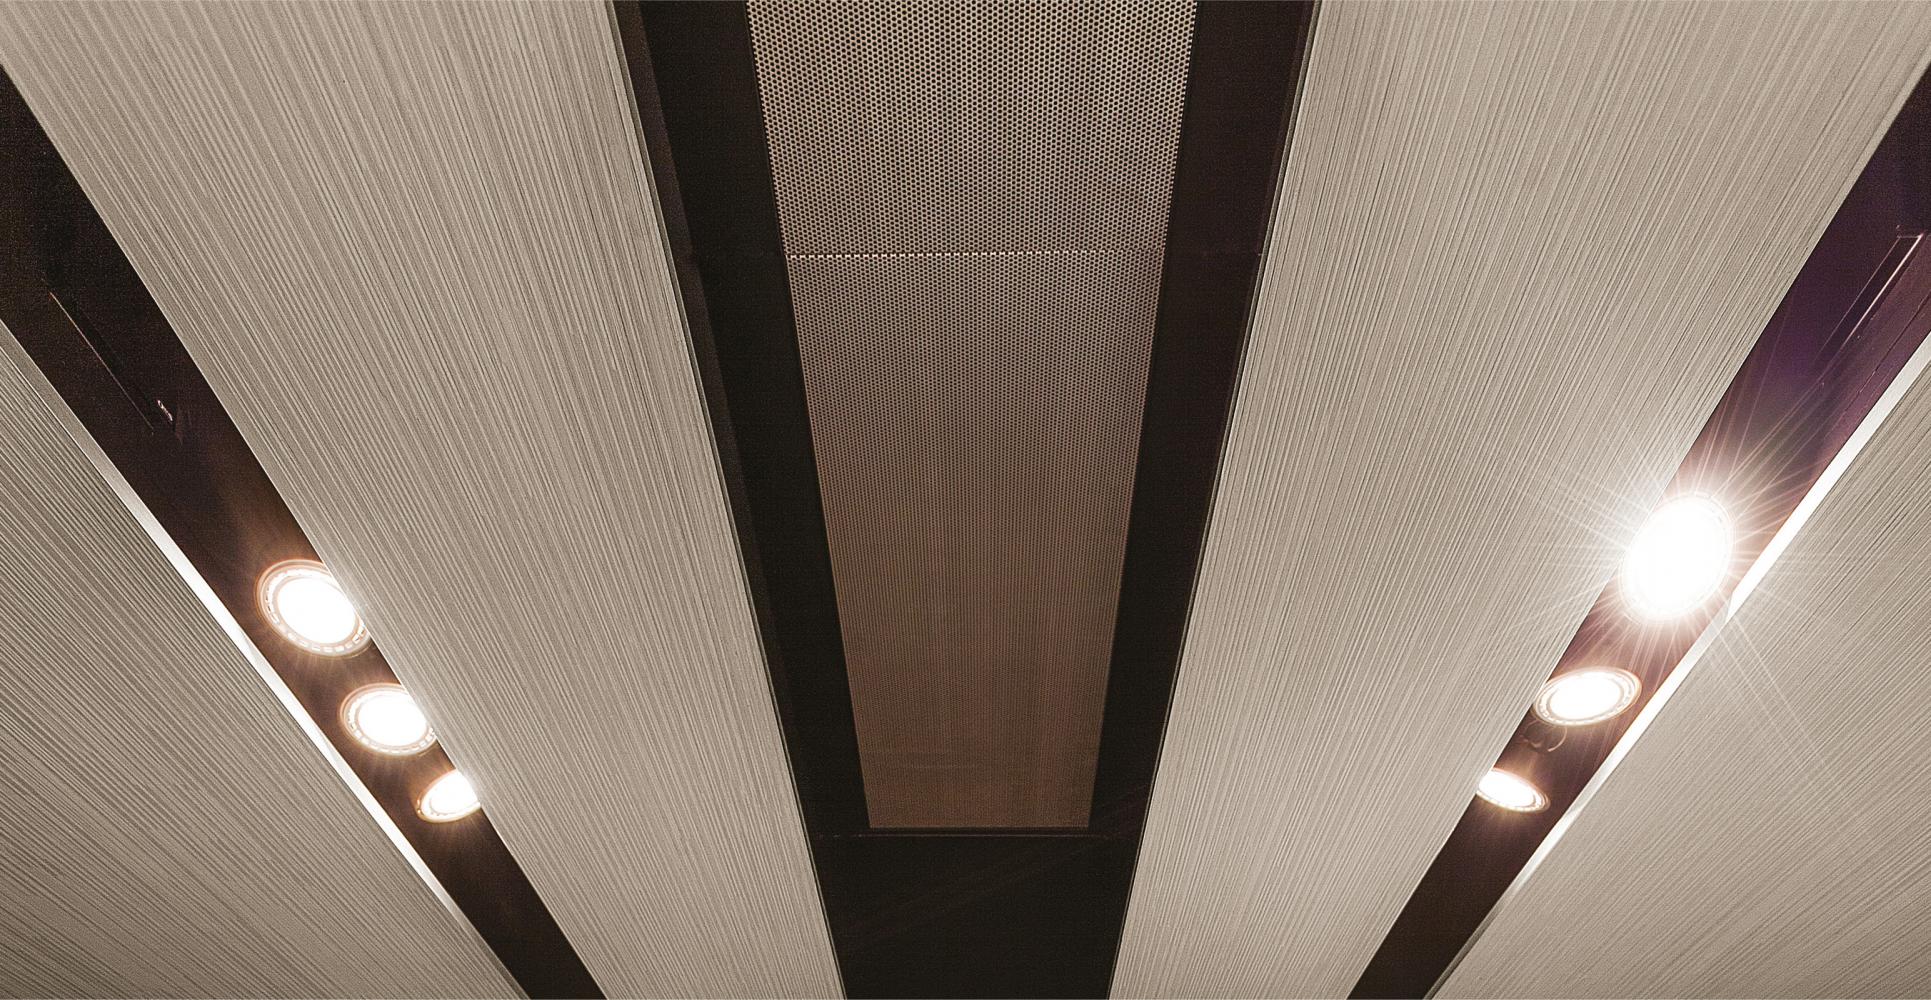 wooden ceiling of bespoke luxury modern kitchen